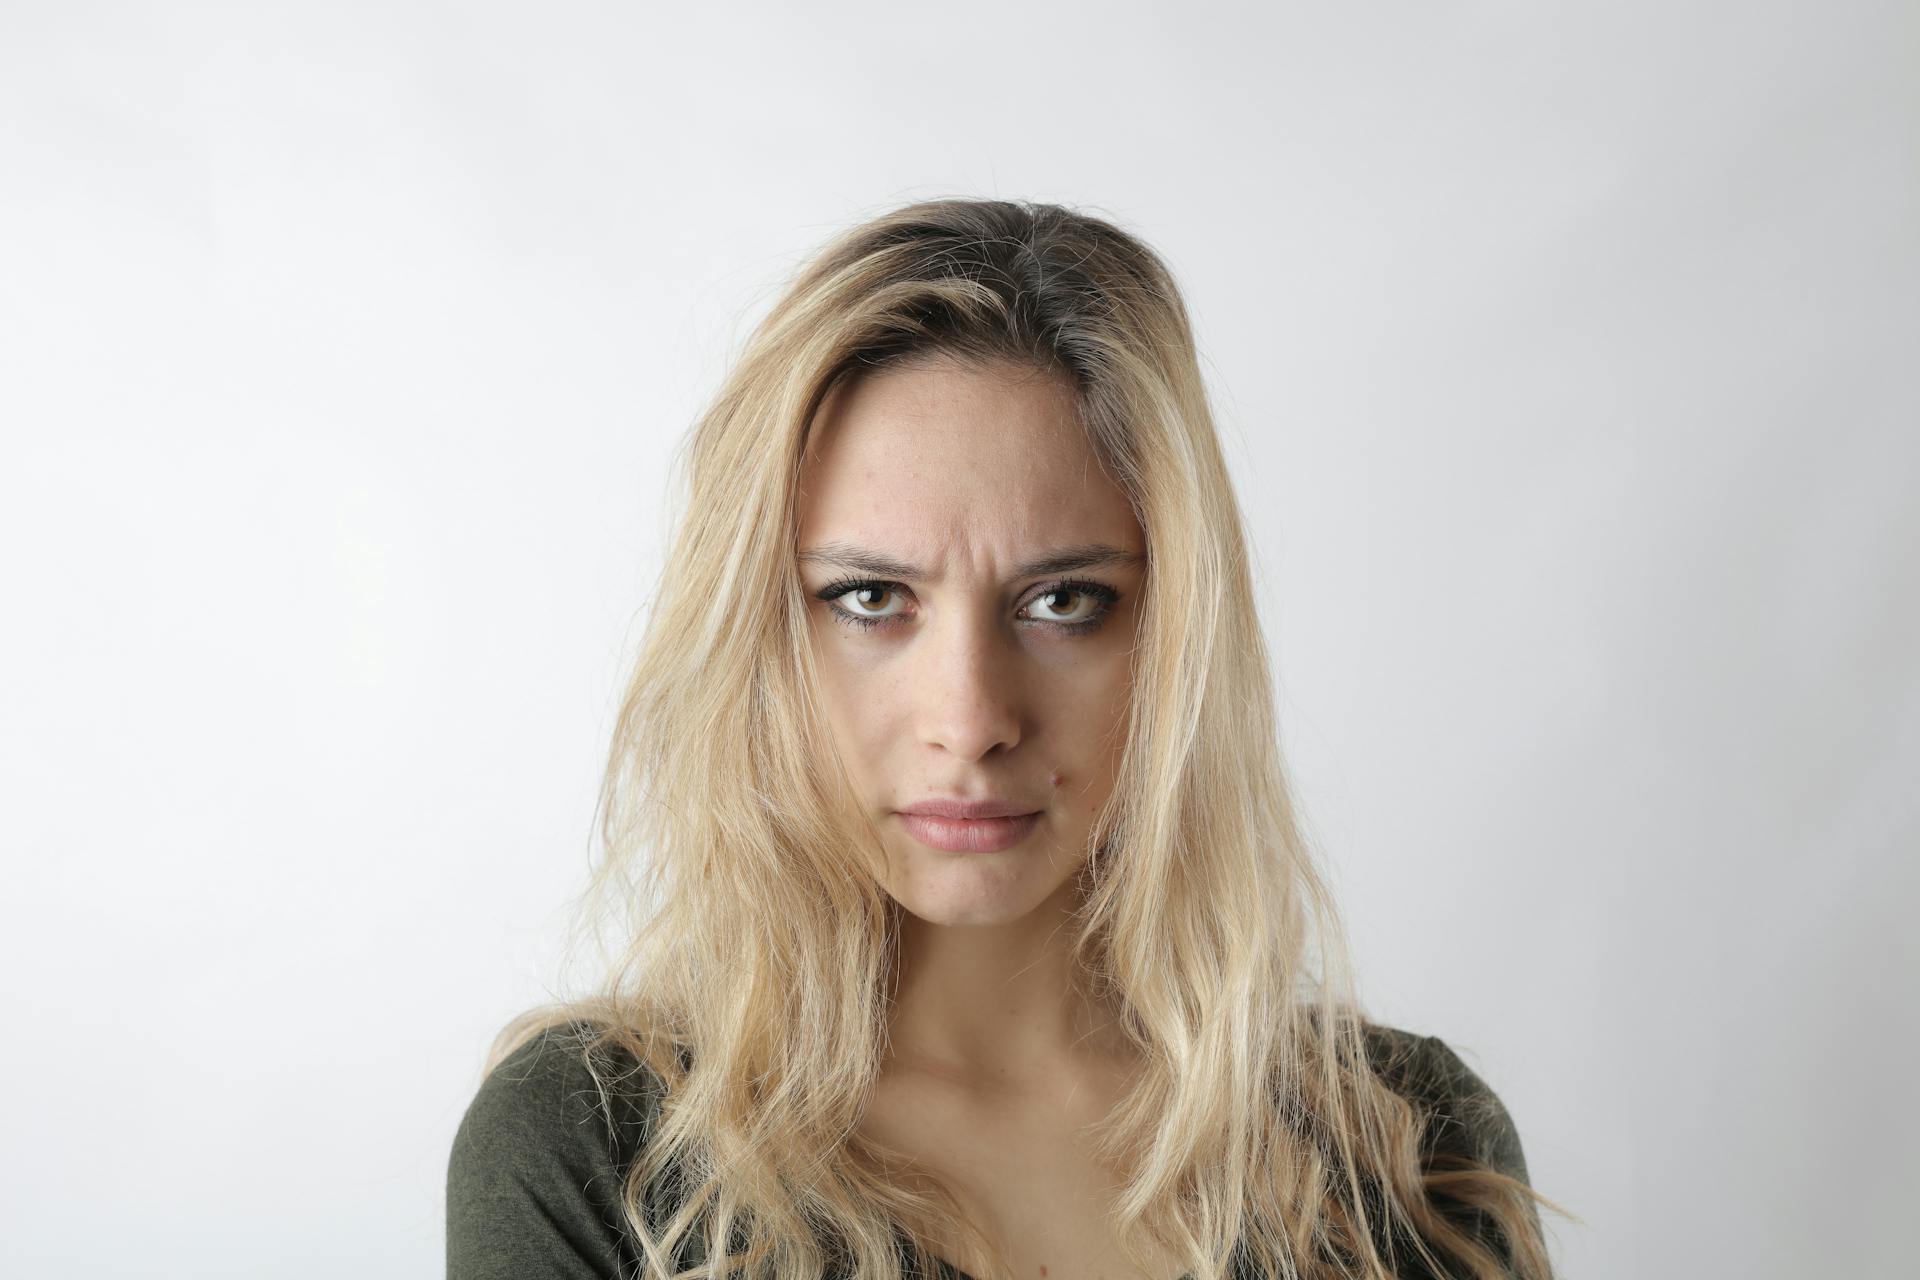 Woman frowning at the camera | Source: Pexels